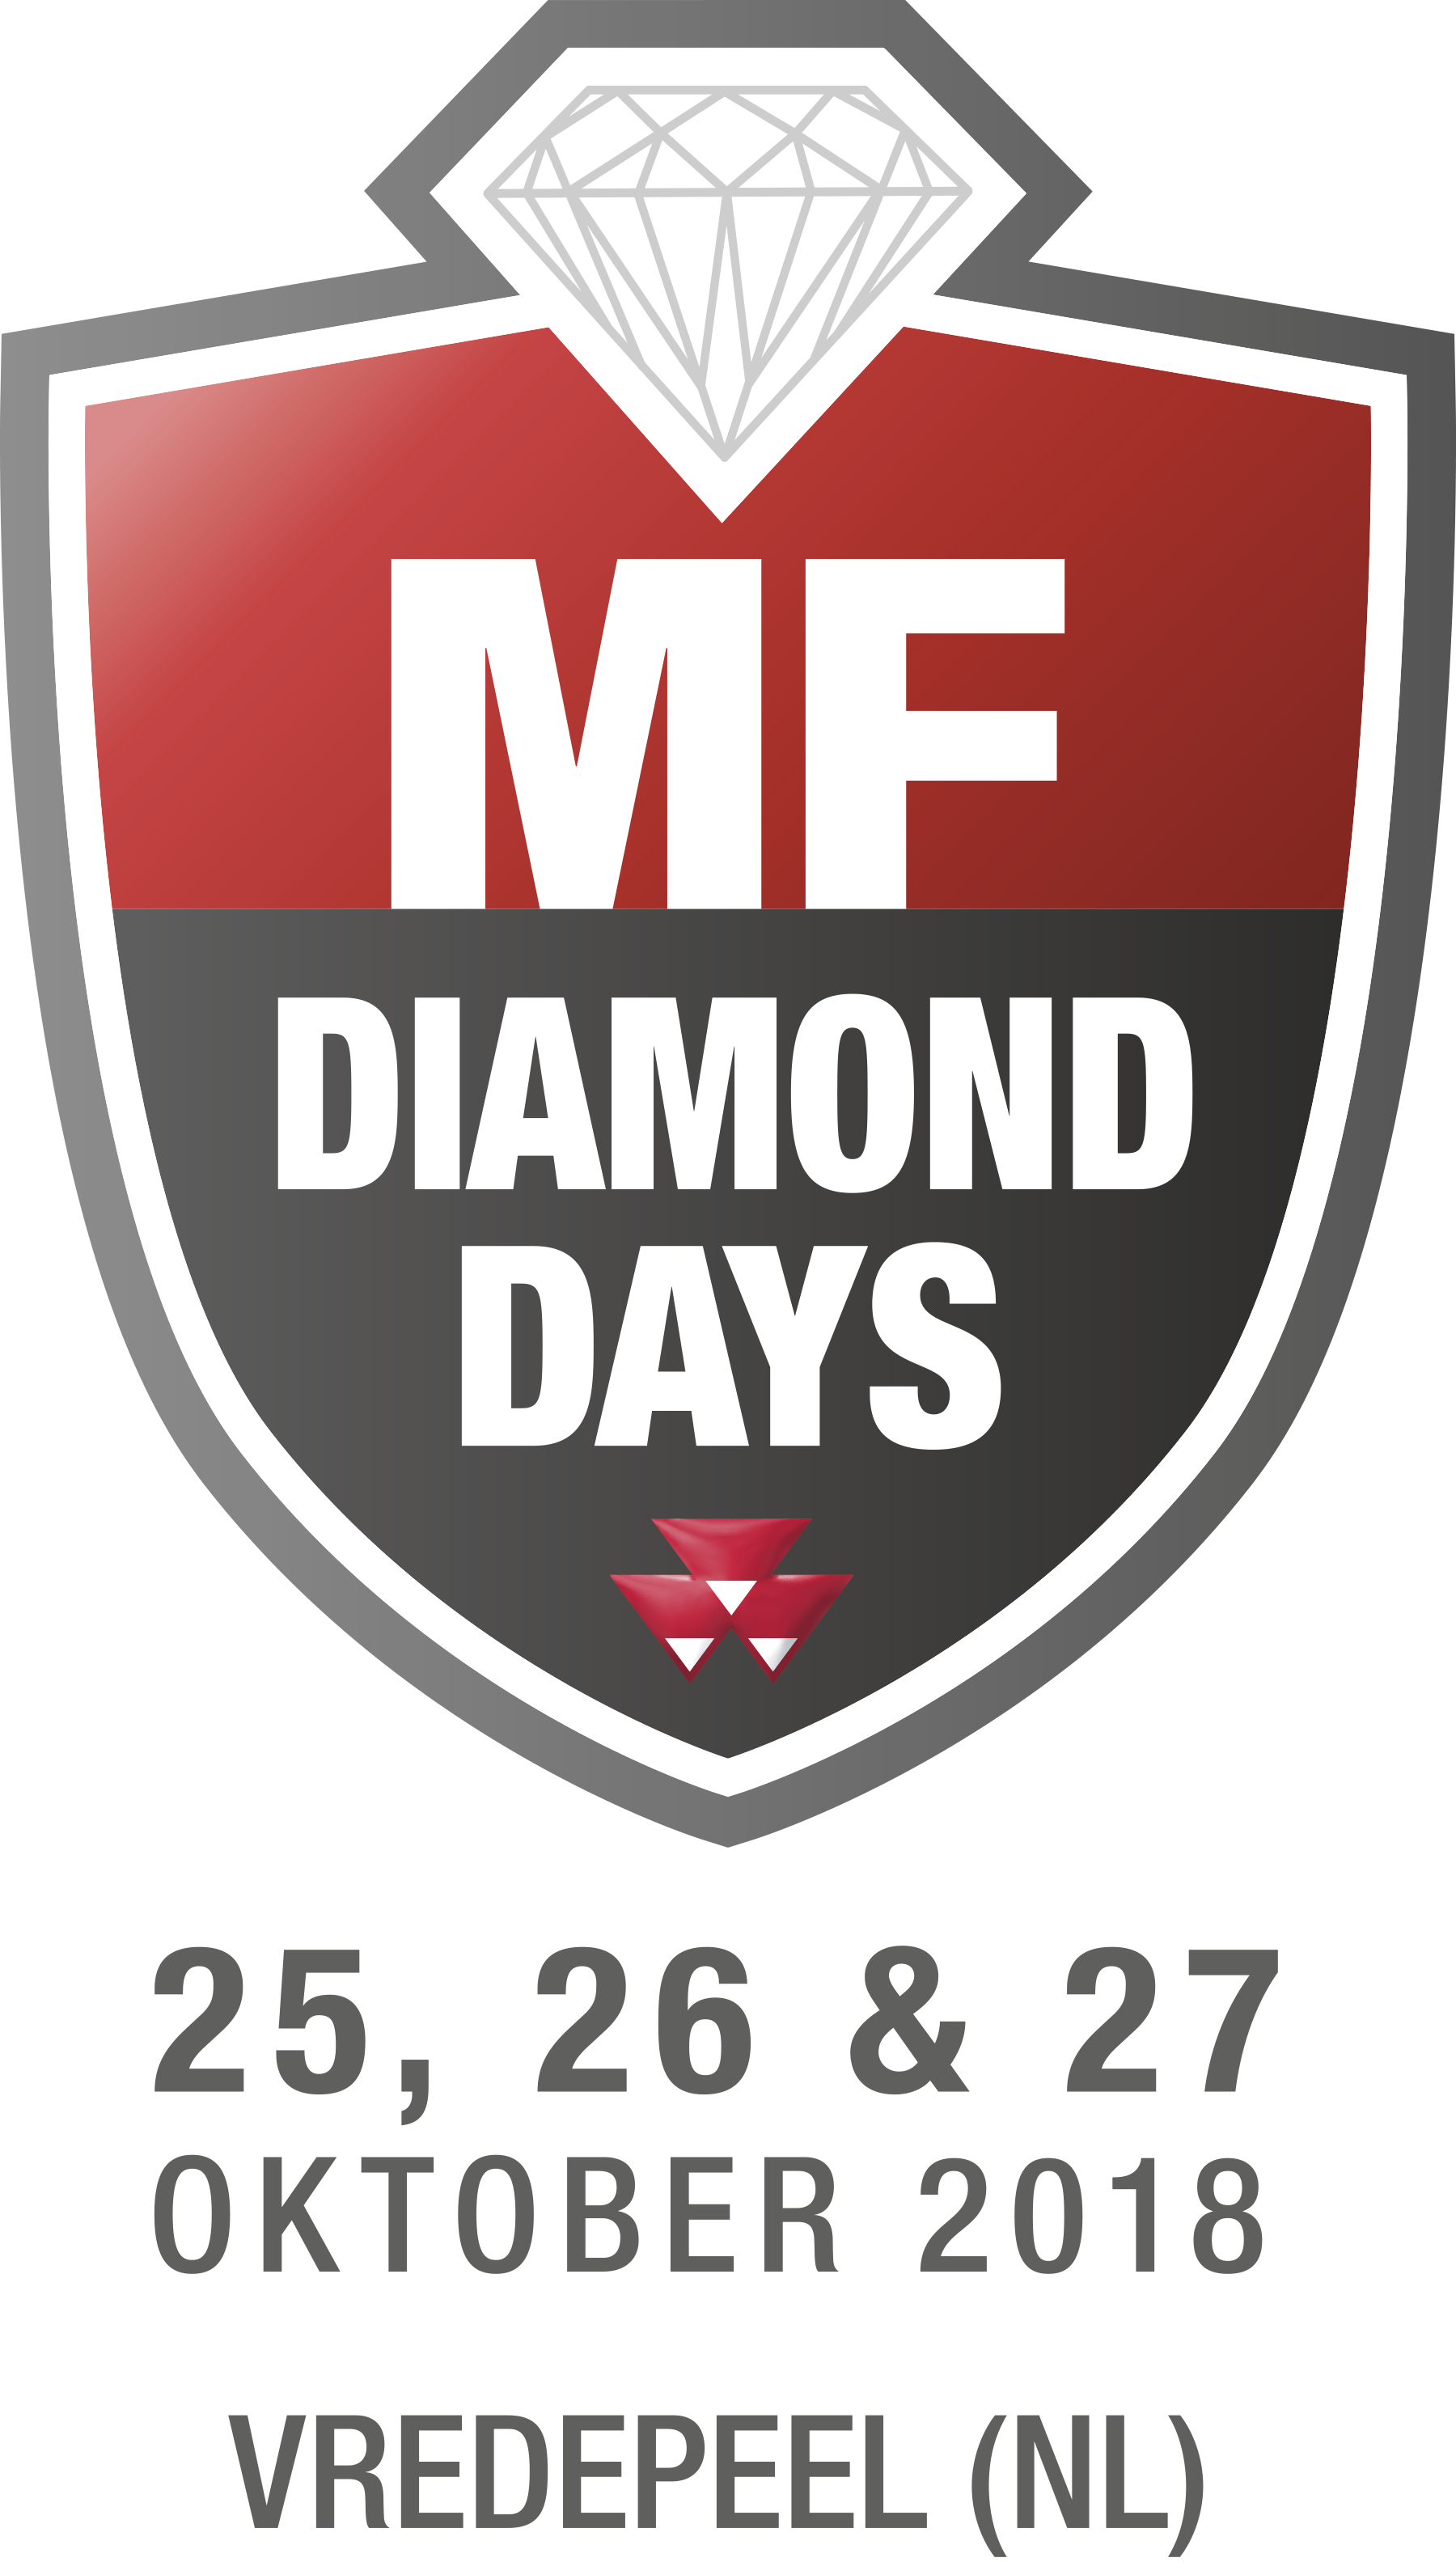 MF Diamond Days logo